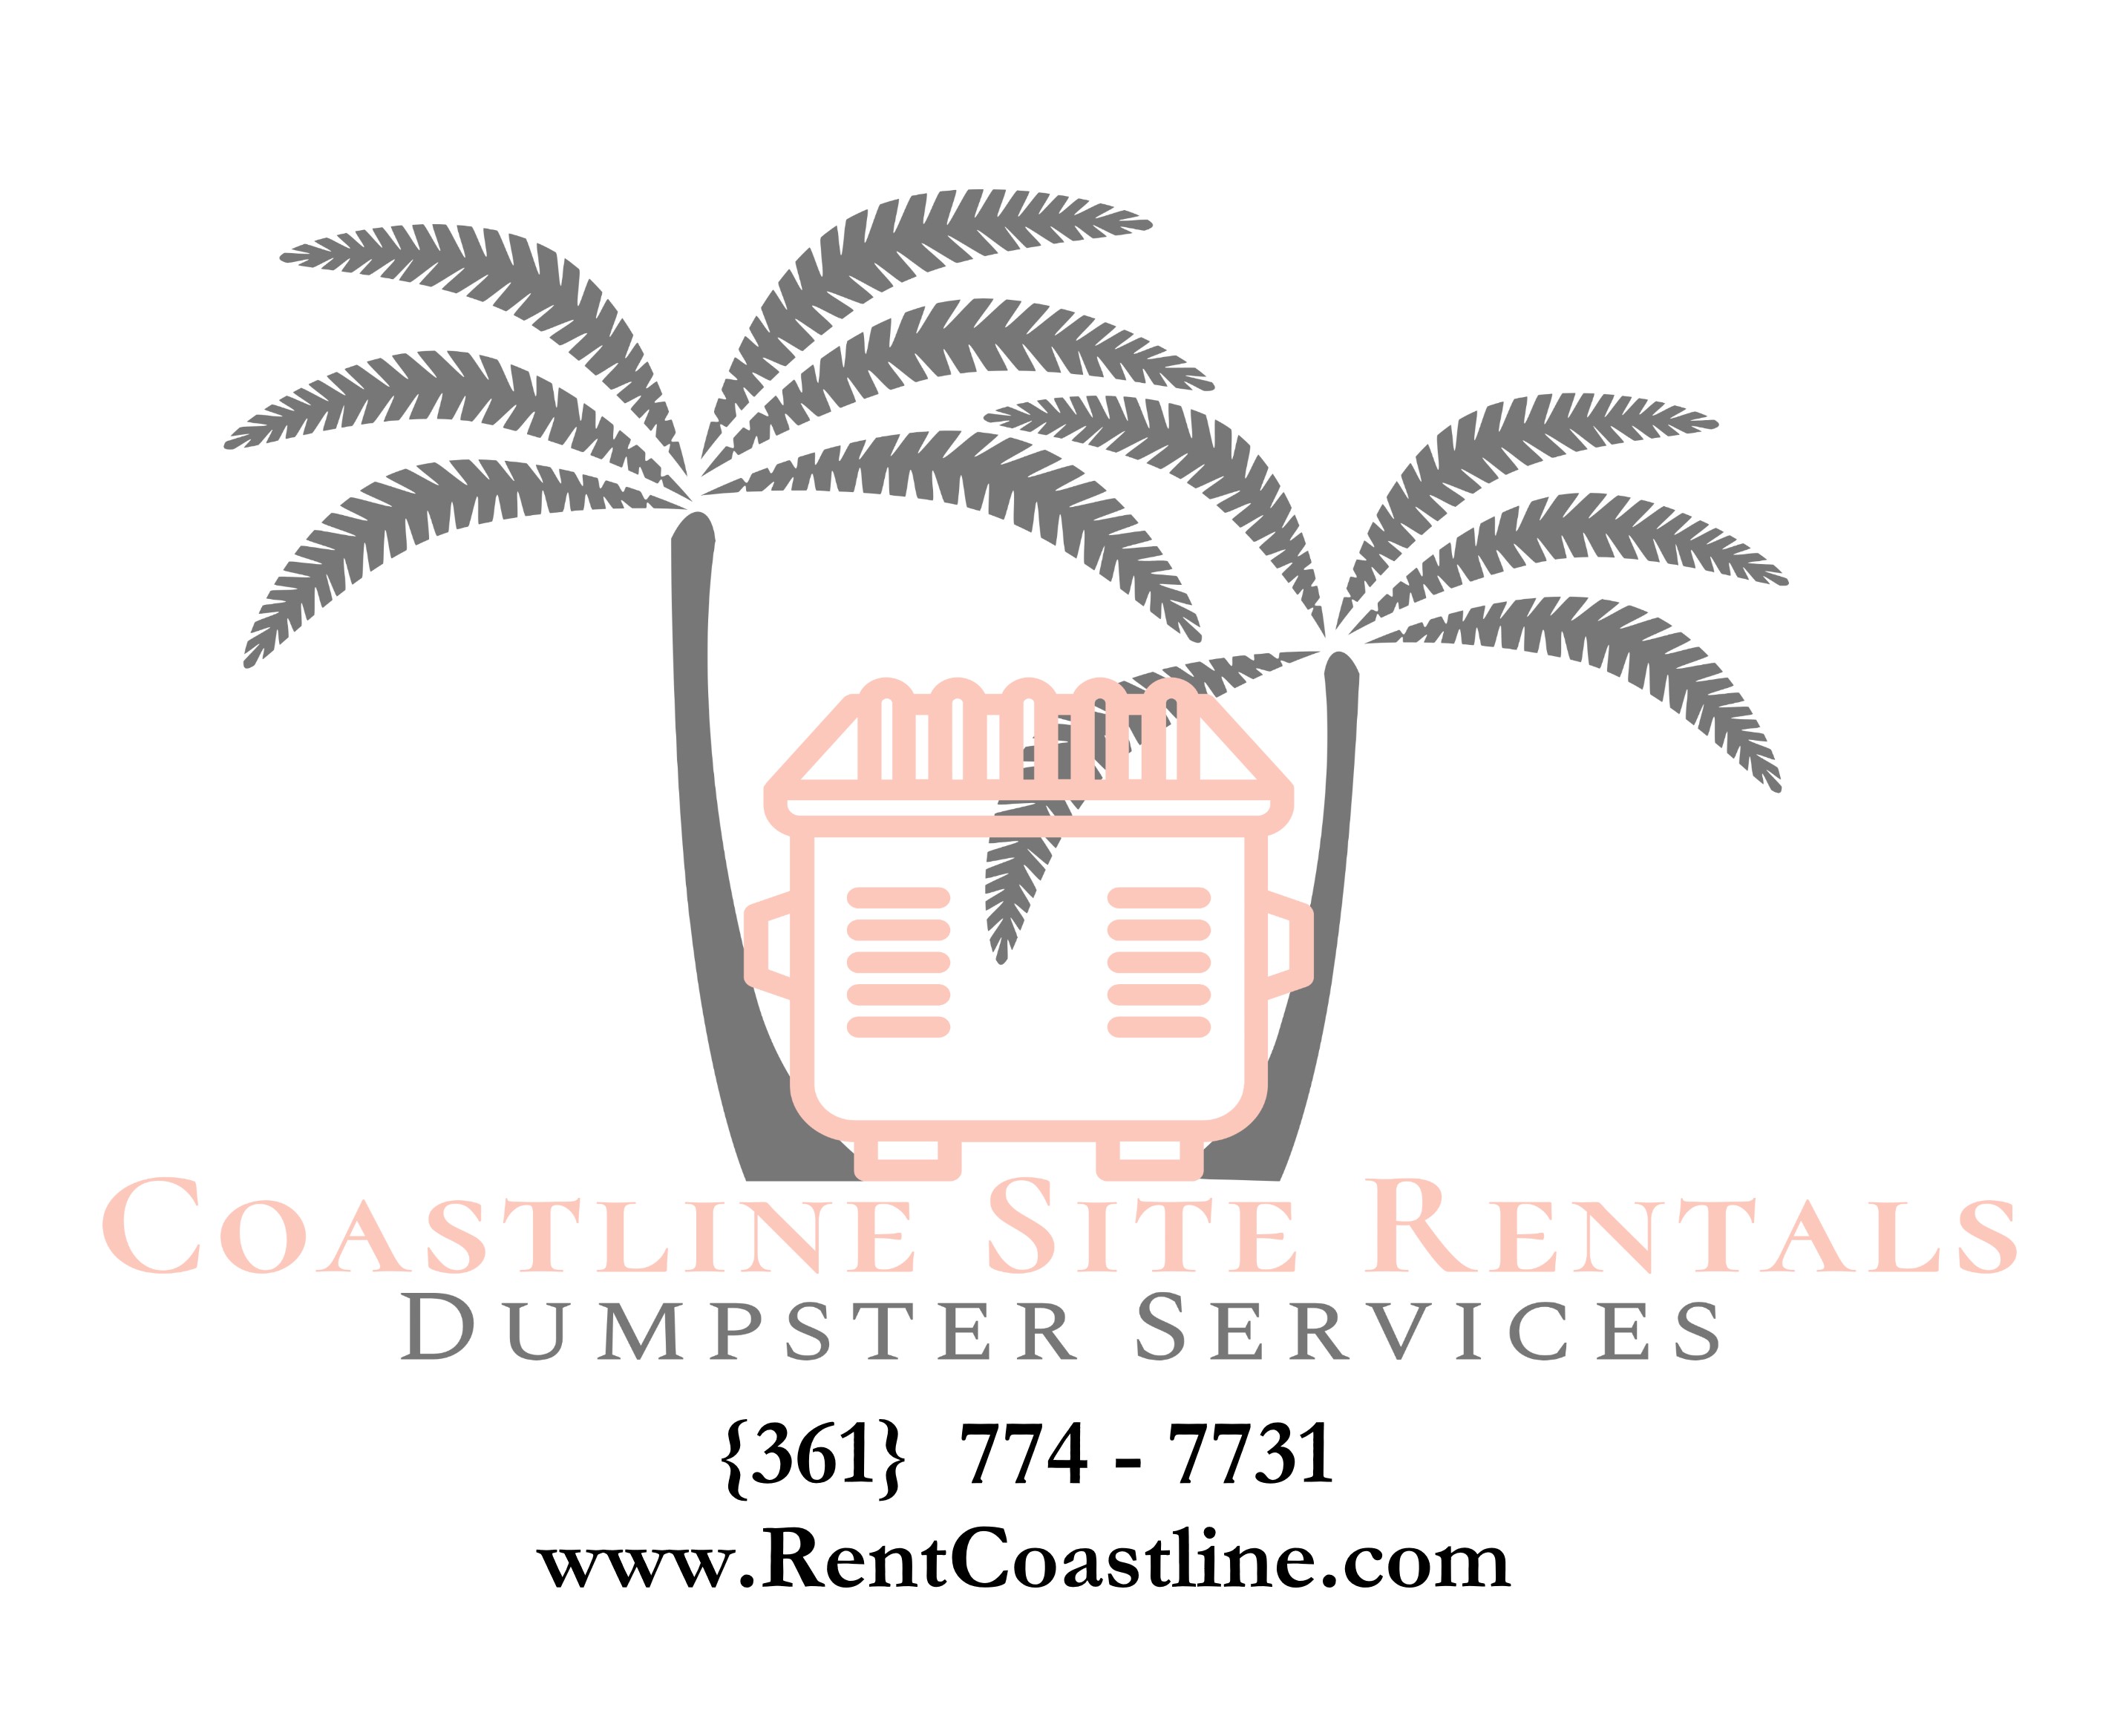 Coastline Site Rentals - Dumpster Services Logo